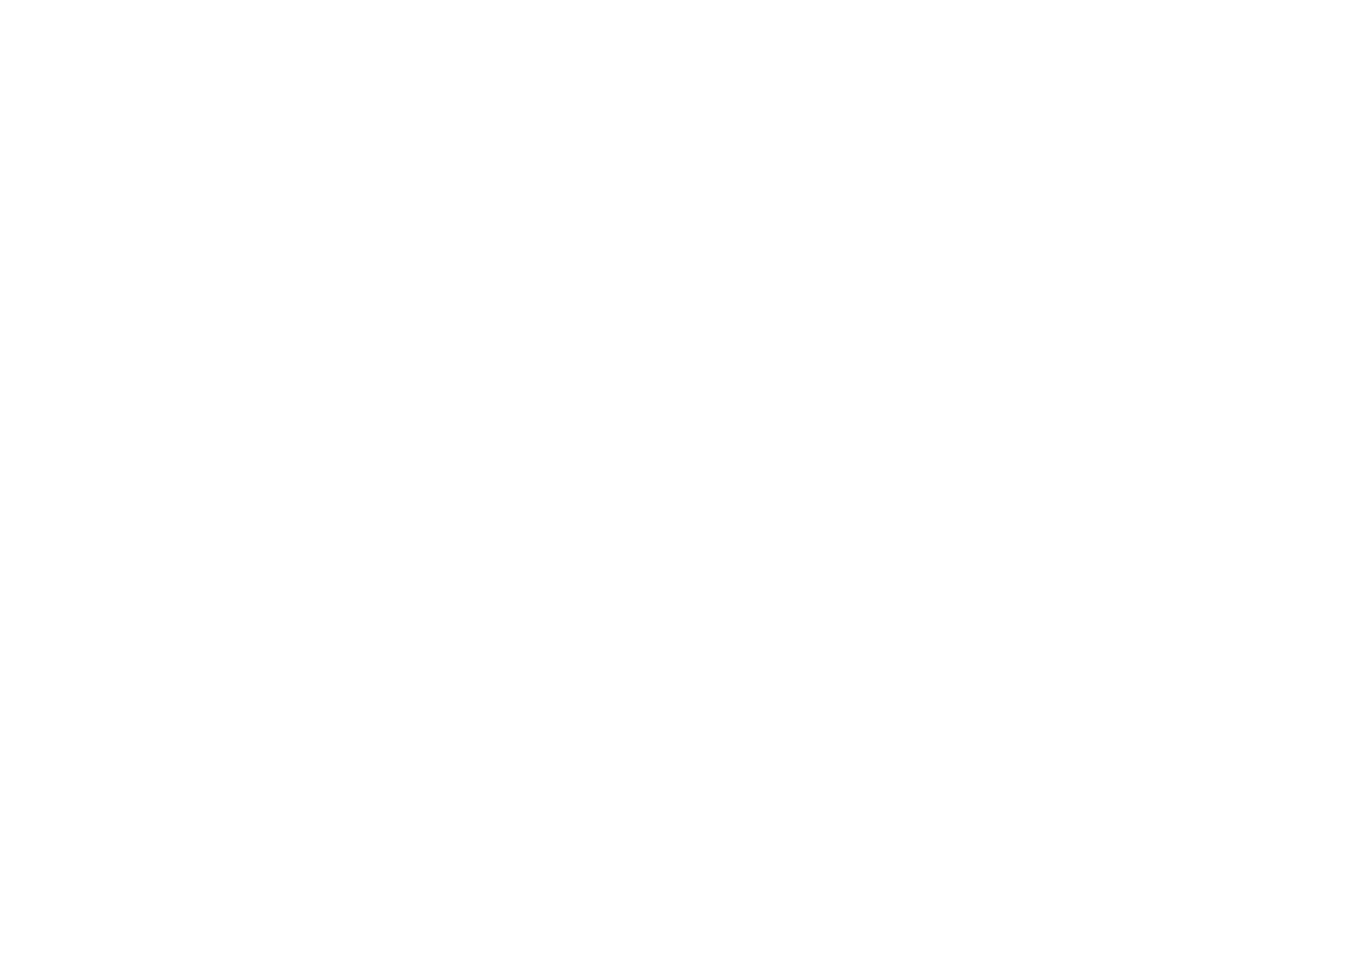 Mopar logo links to the Mopar website